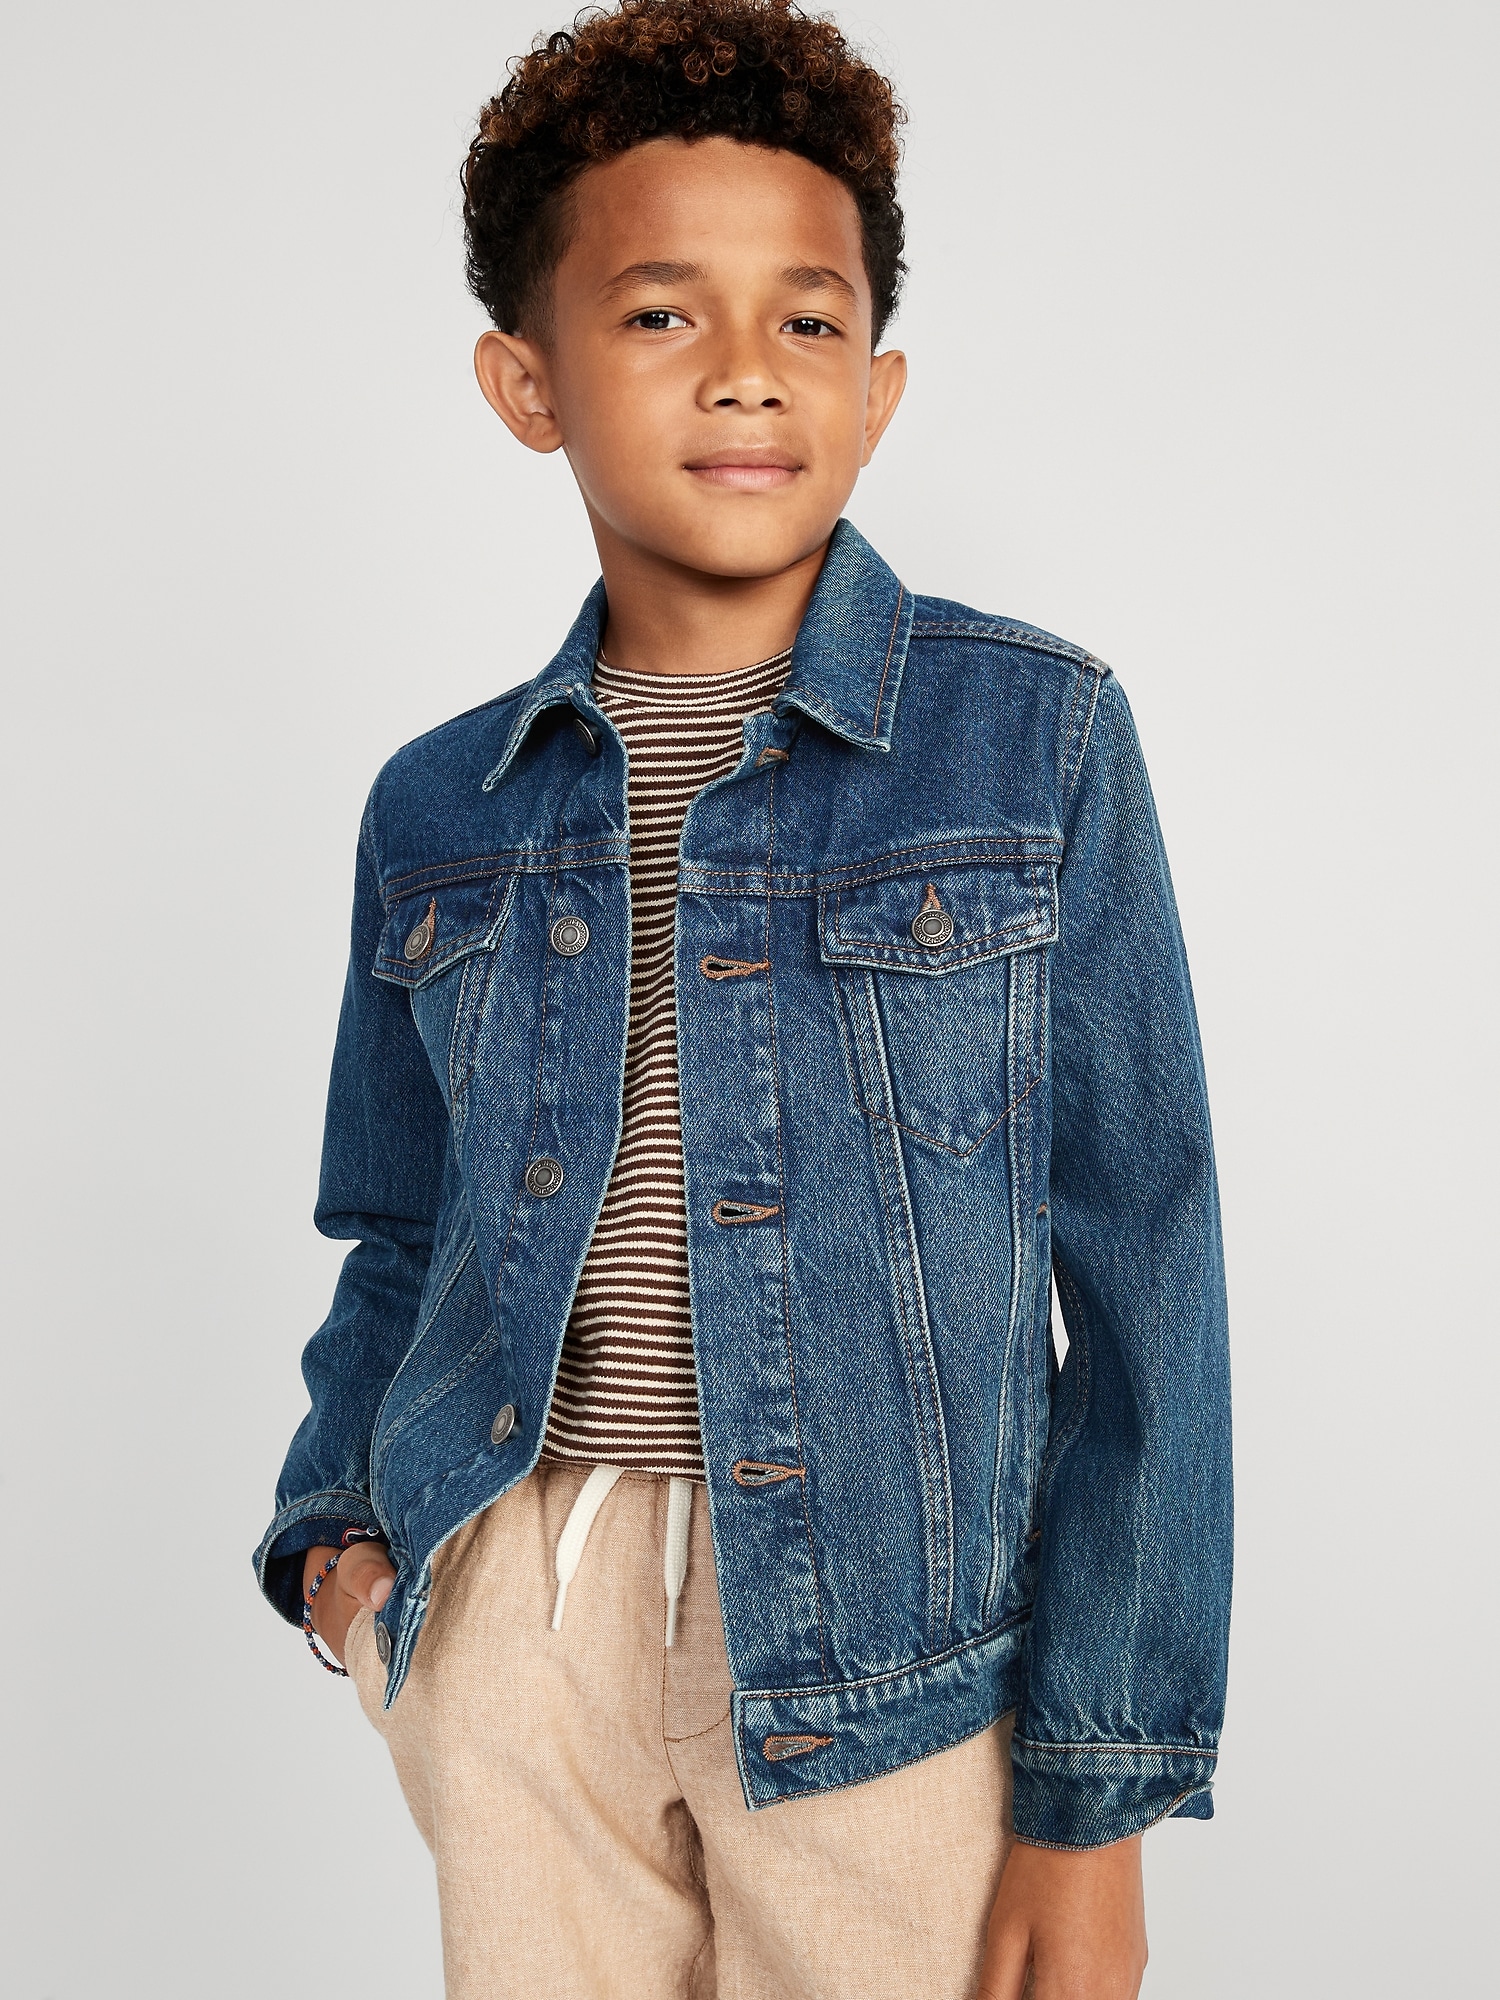 Gender-Neutral Cotton Non-Stretch Jean Jacket for Kids